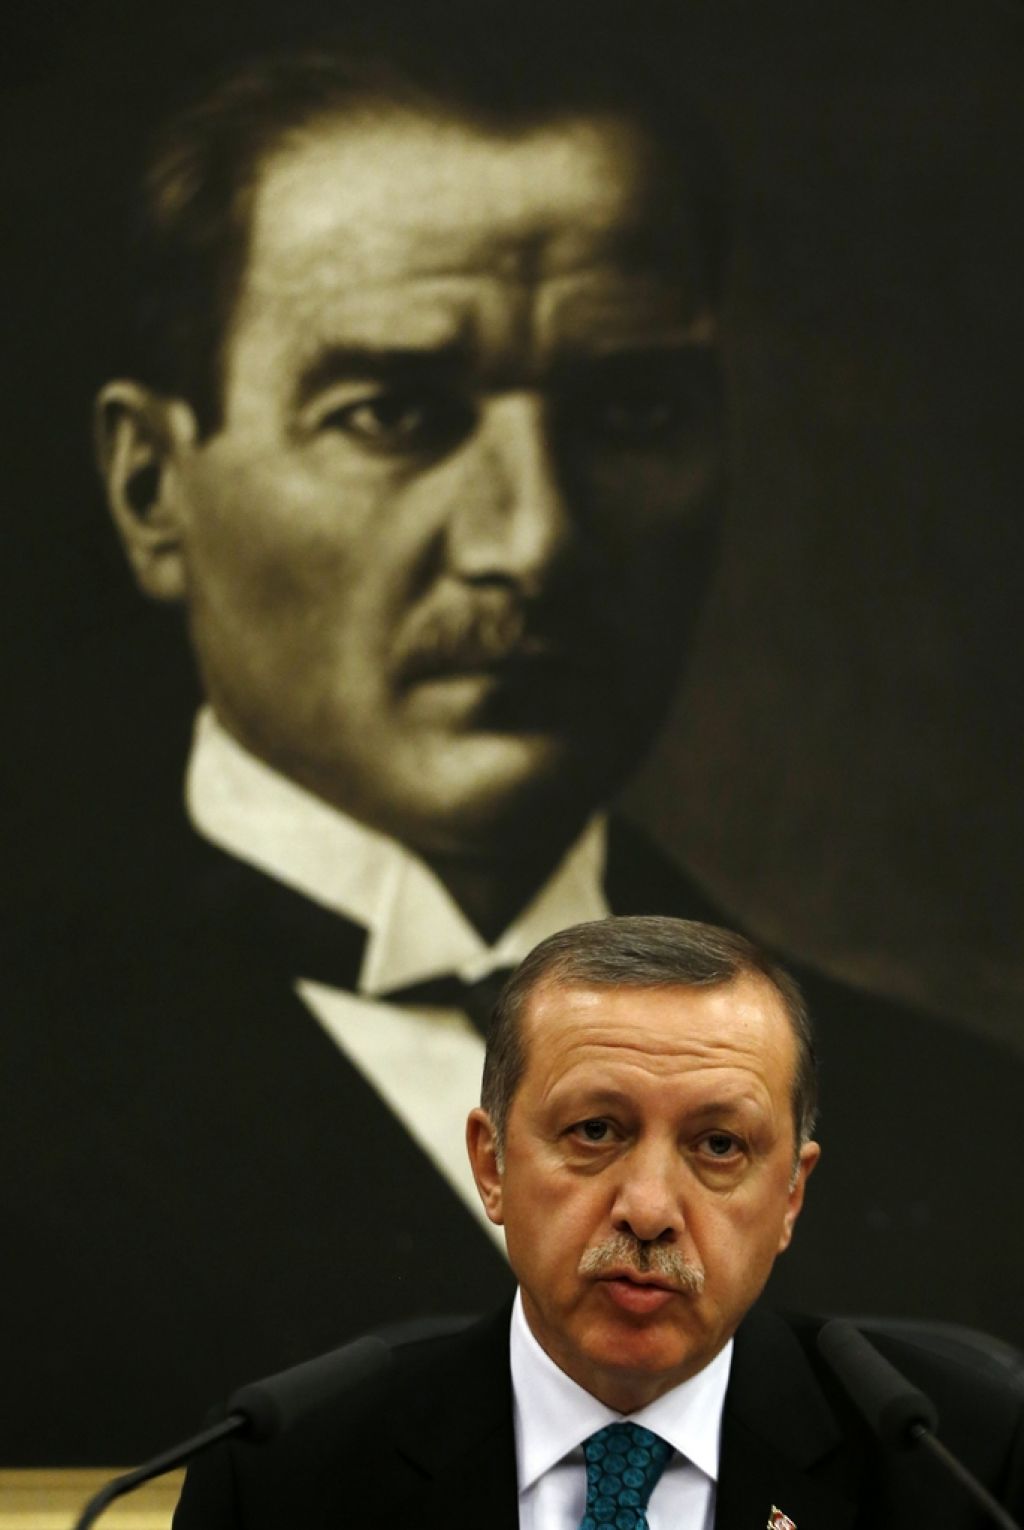 Za Erdogana je demokracija kot tramvaj. Izstopiš kadarkoli